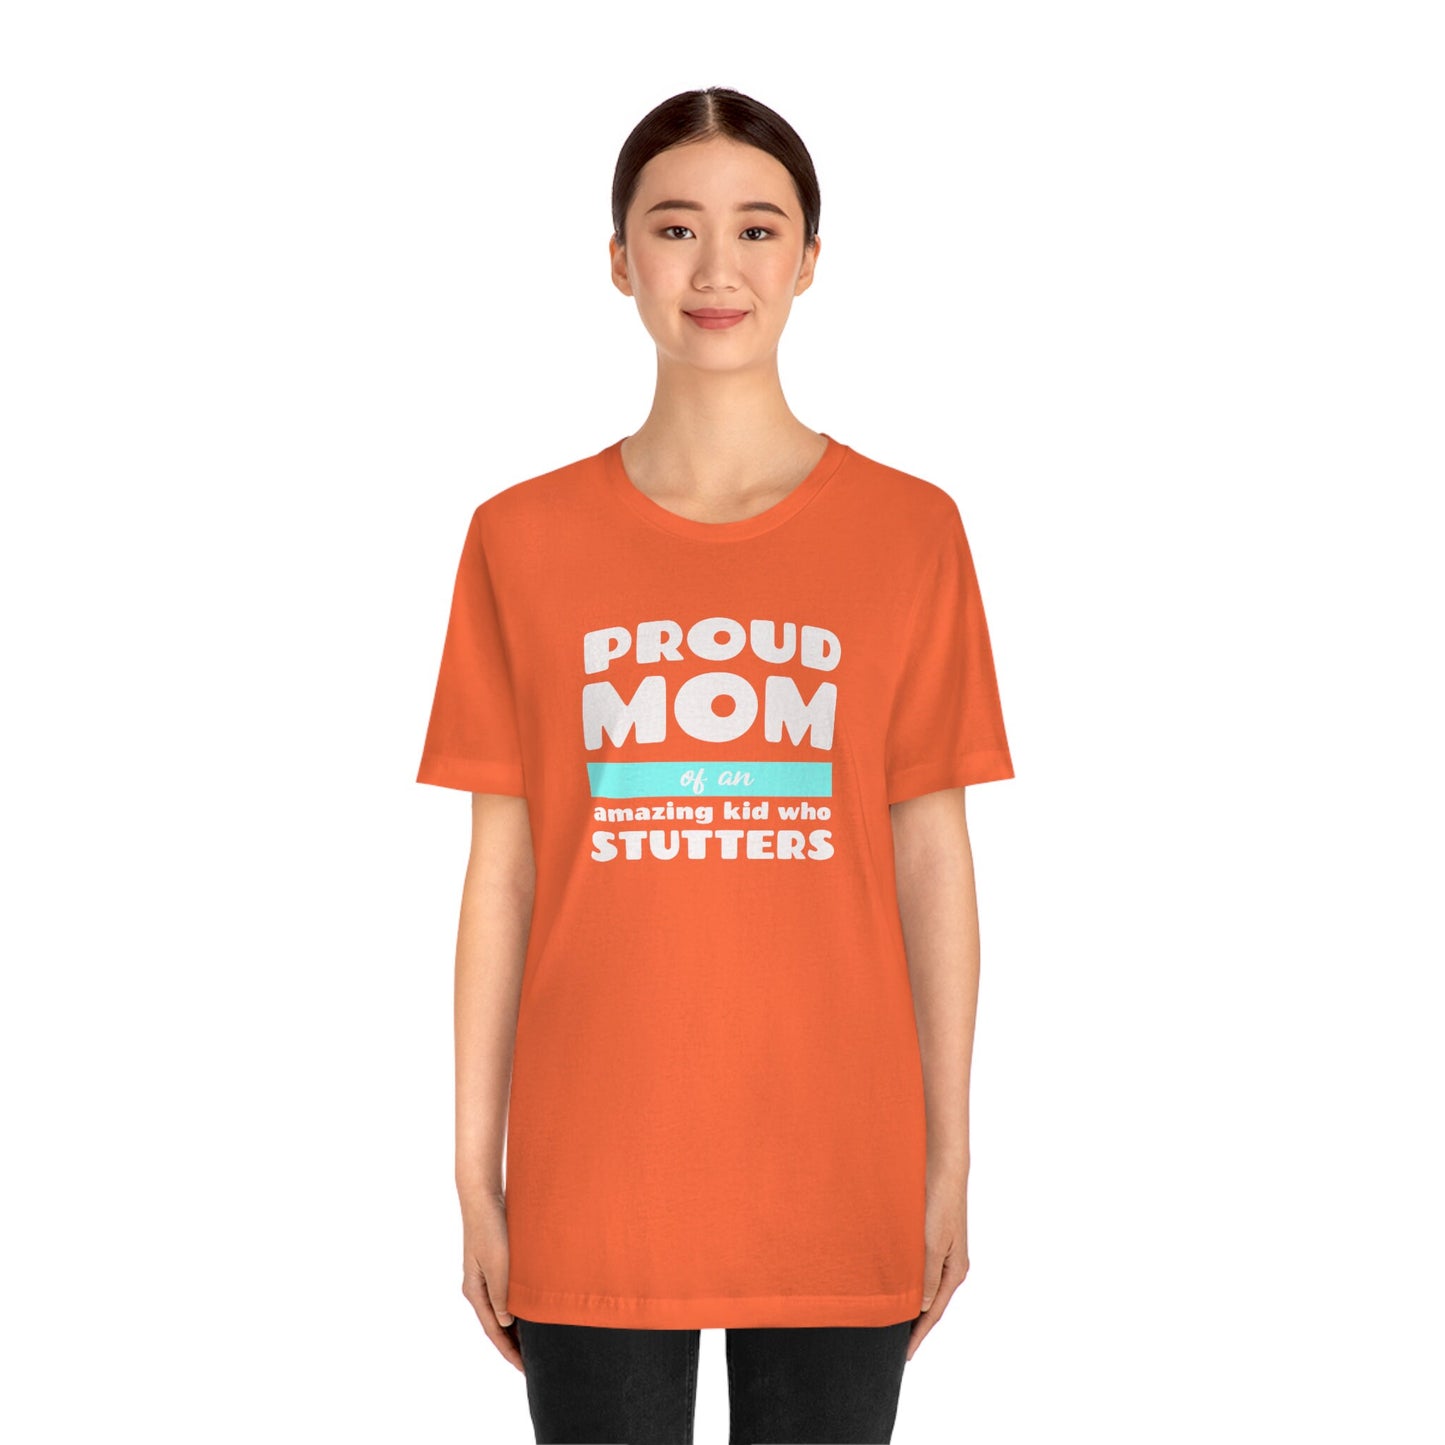 Stutter Proud Mom Shirt Mother's Day Gift